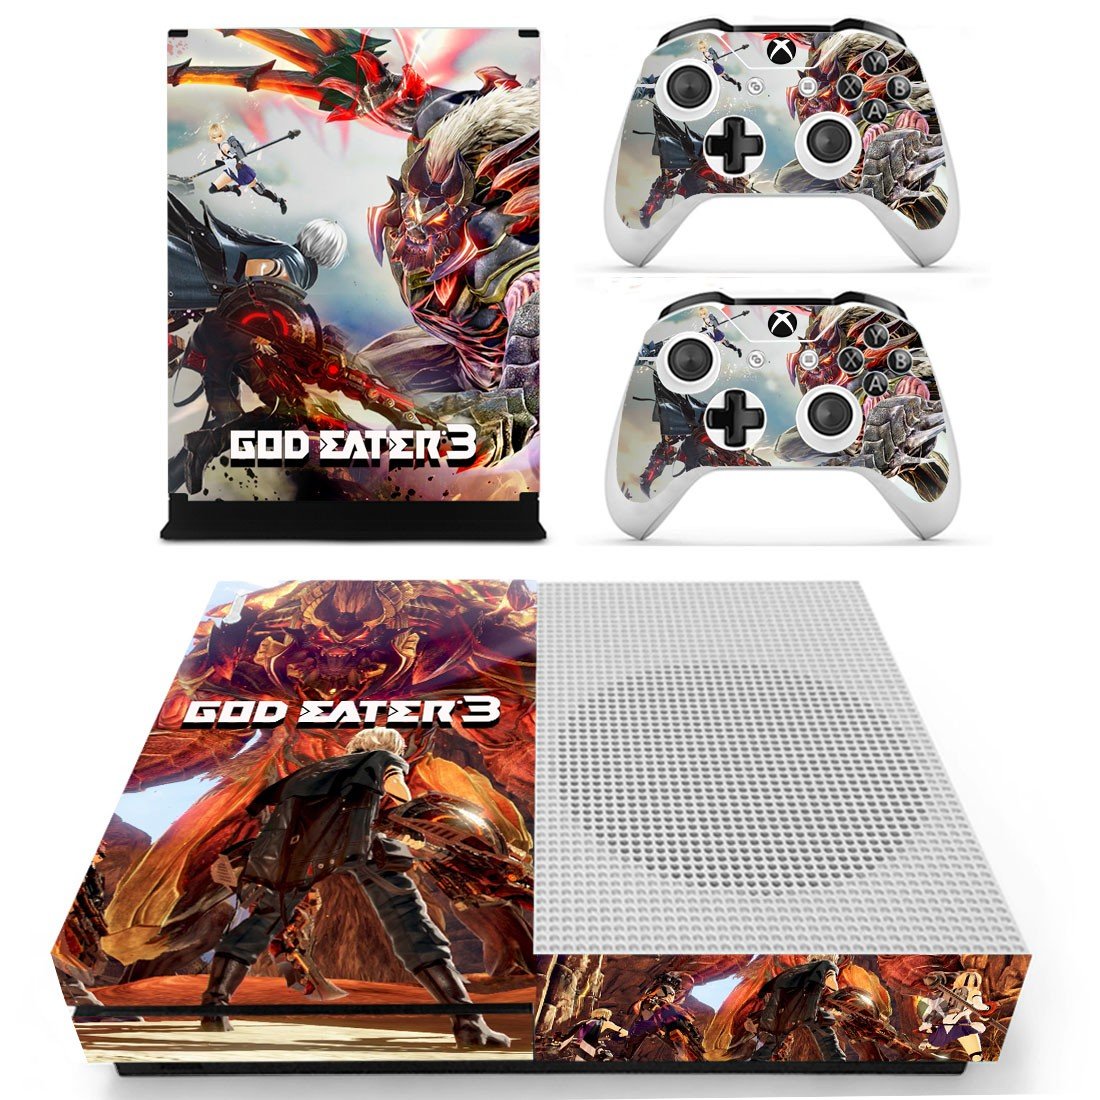 Xbox One S Skin Cover - God Eater 3 Design 1